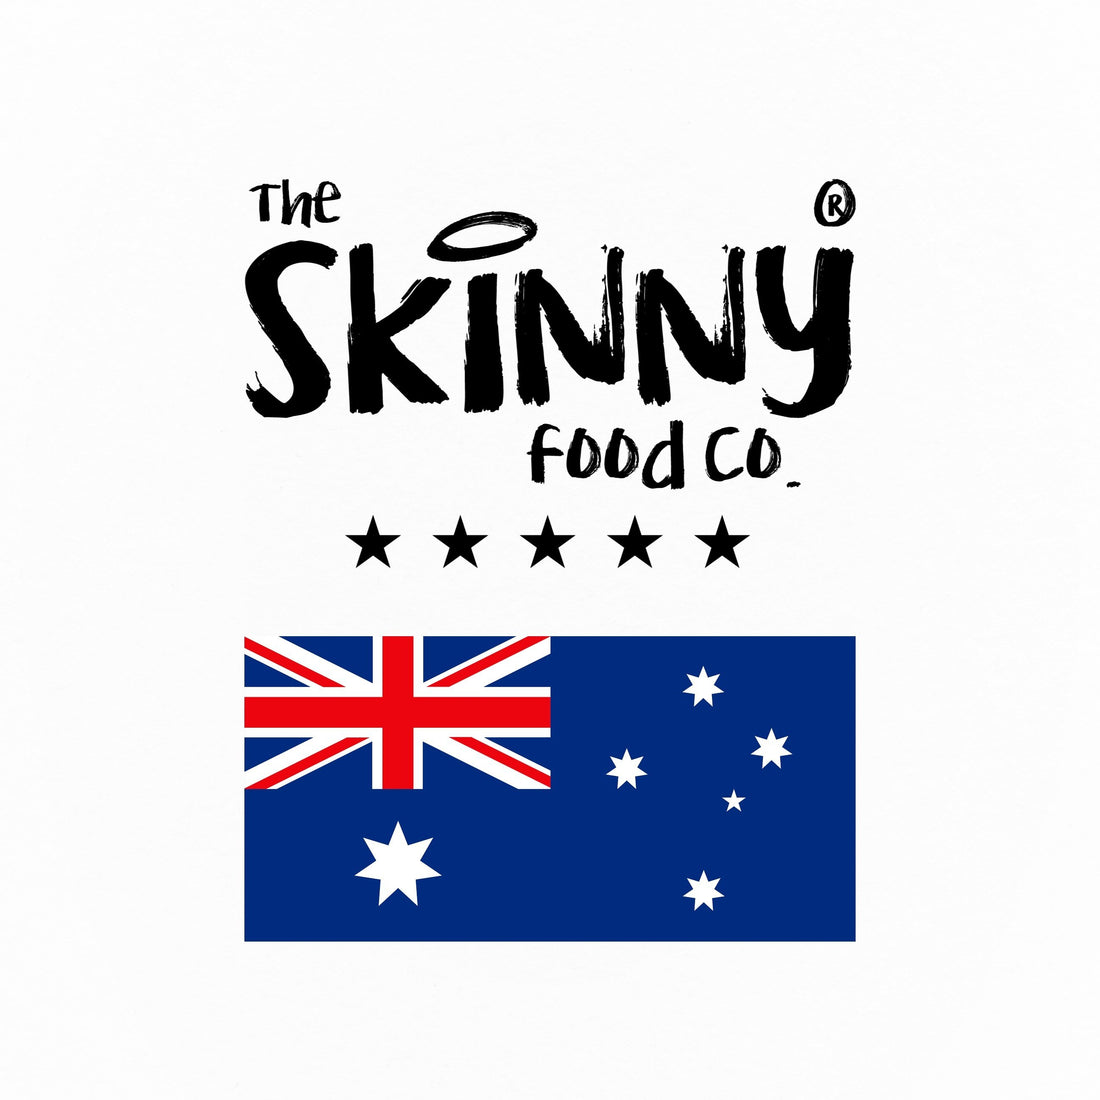 Skinny Food Co sāk darboties Austrālijā! - theskinnyfoodco